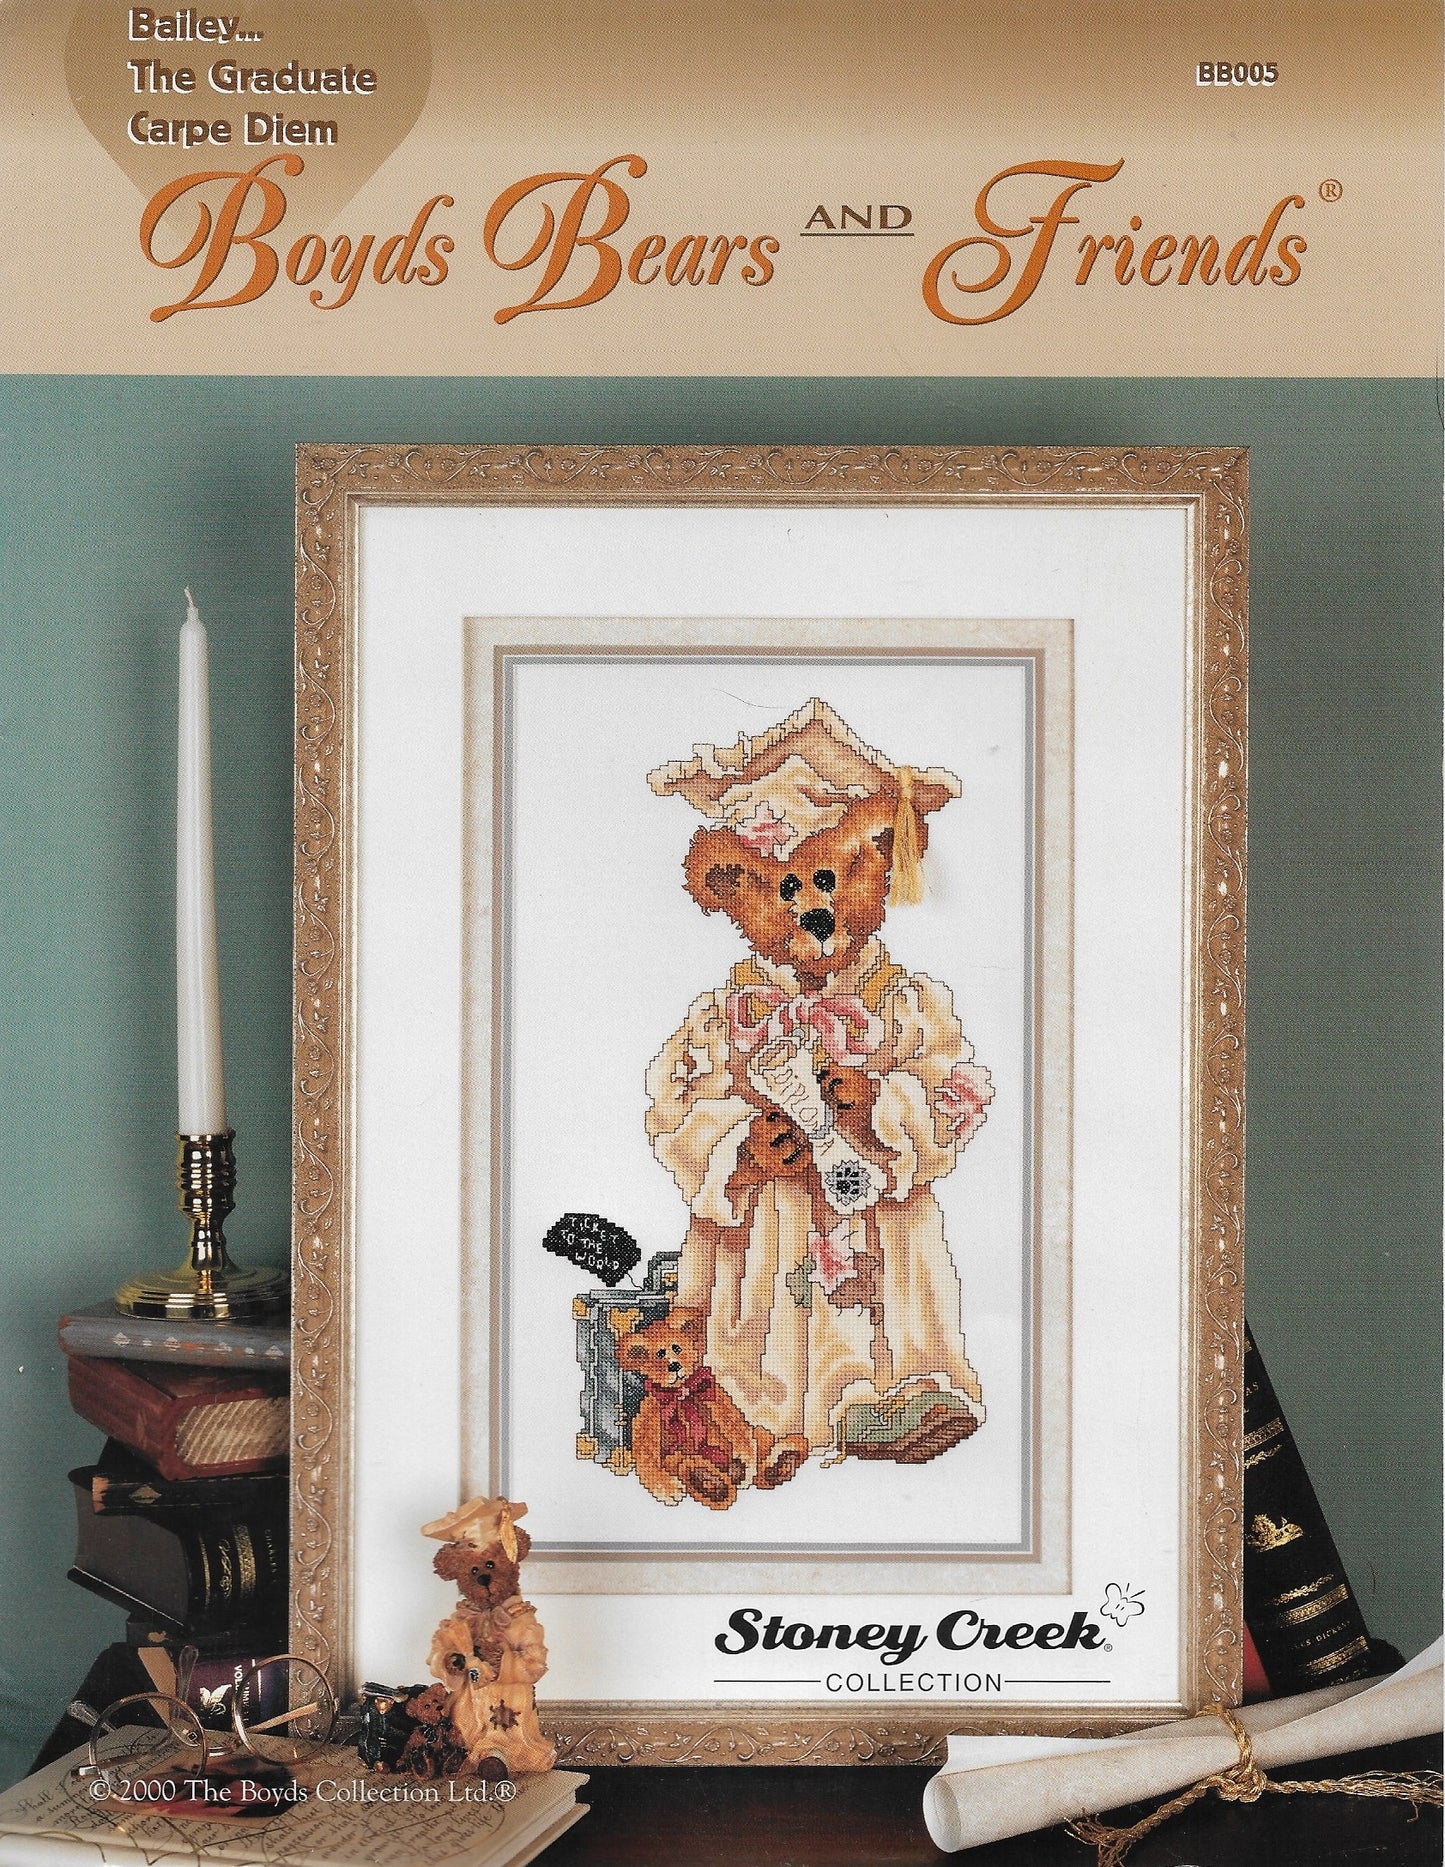 Stoney Creek Bailey The Graduate Boyds Bears and Friends BB005 cross stitch pattern